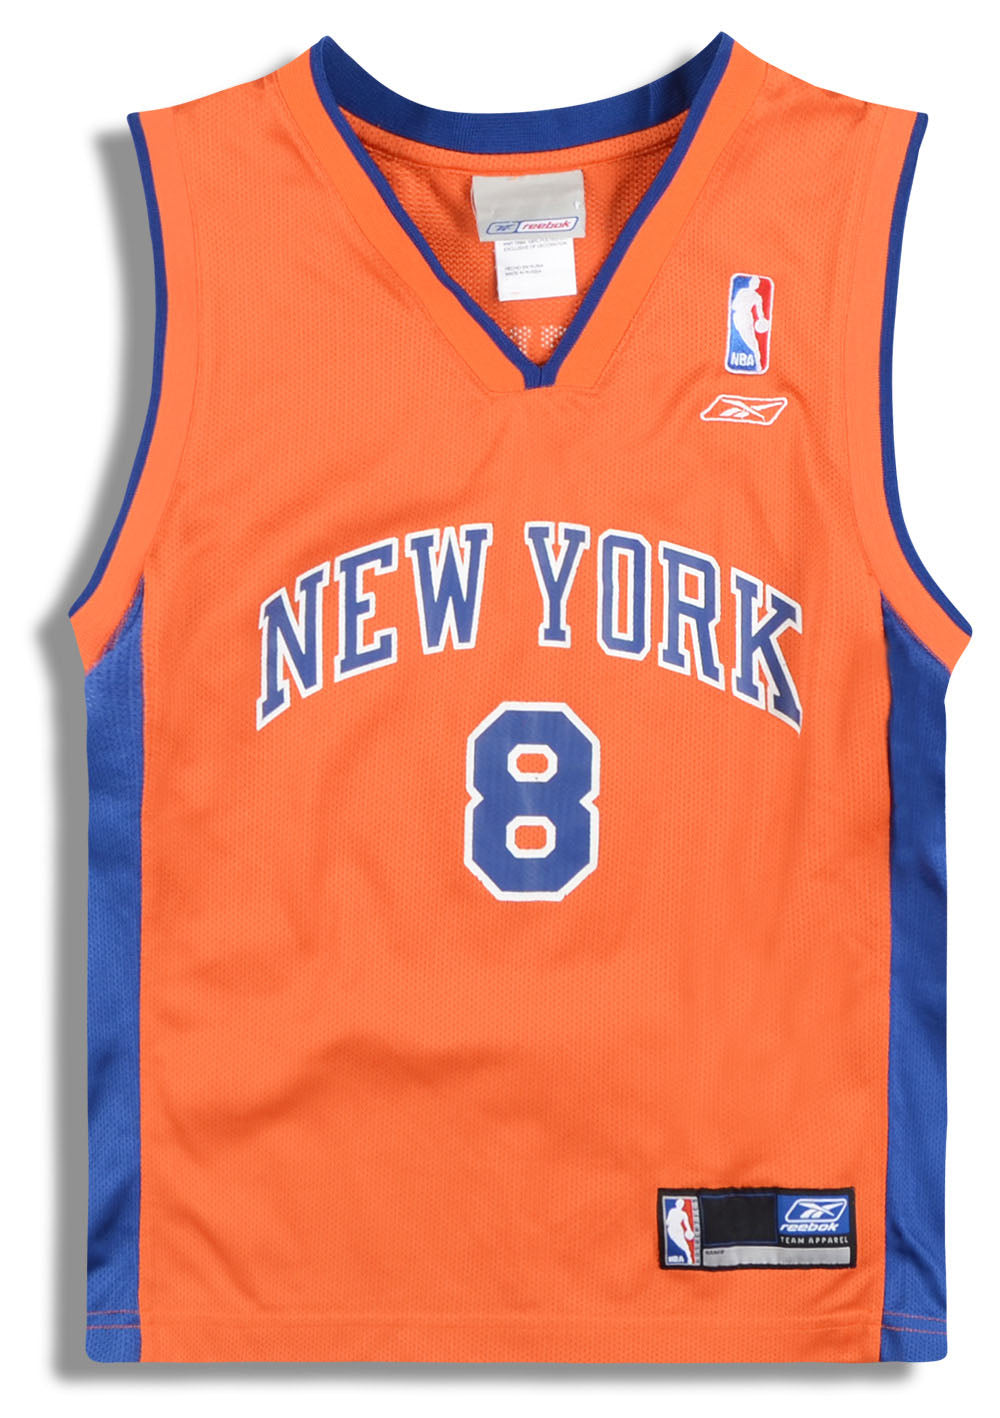 New York Knicks Jersey & Apparel